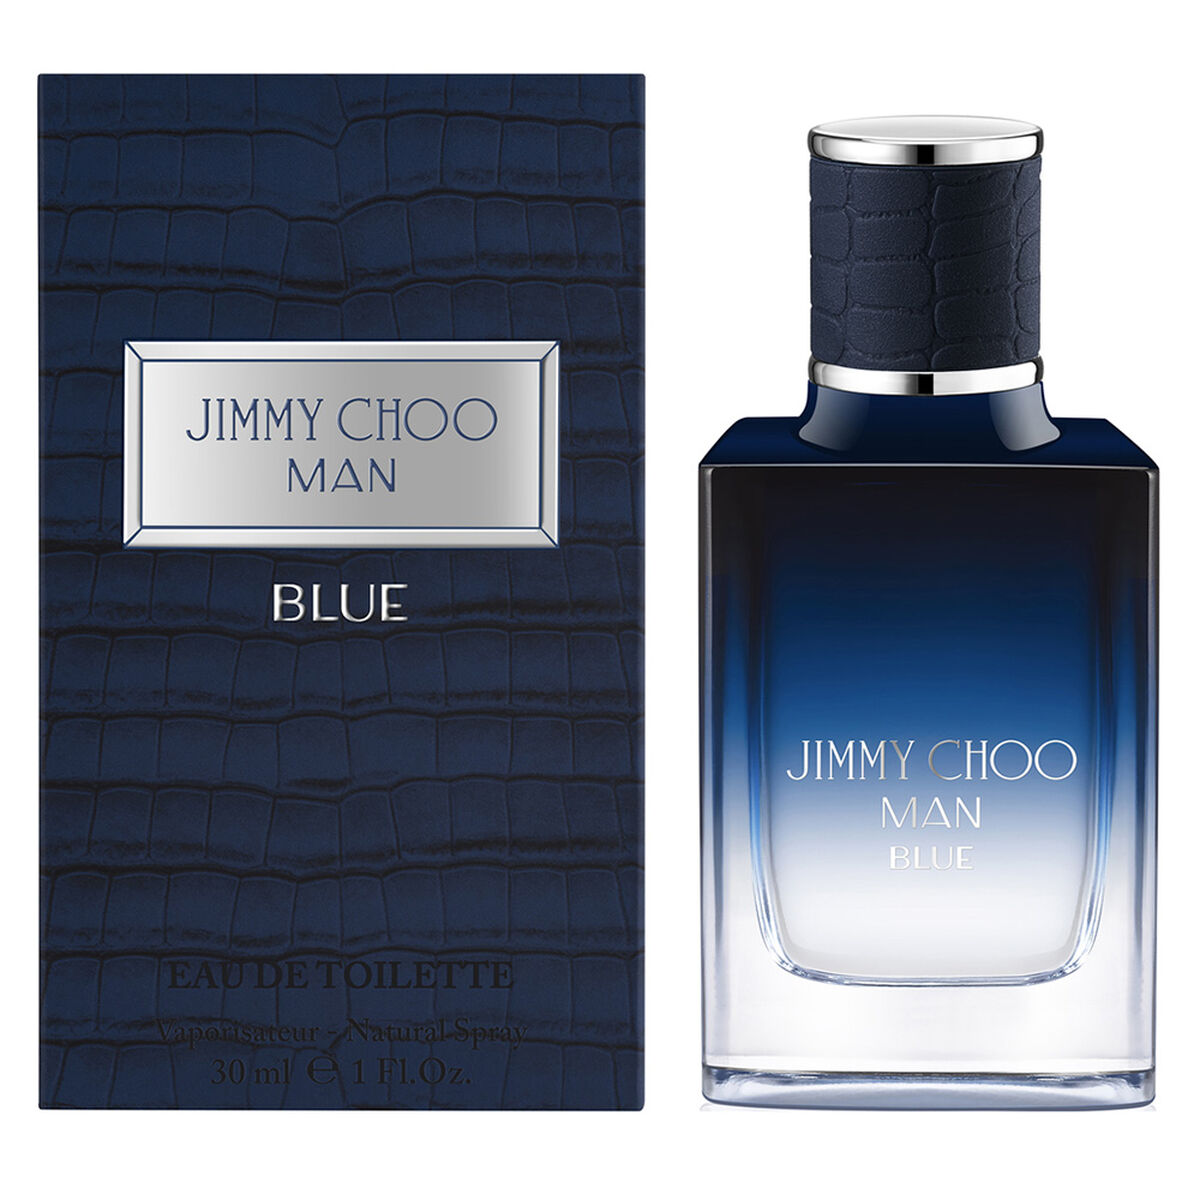 Perfume Jimmy Choo Man Blue EDT 30 ml